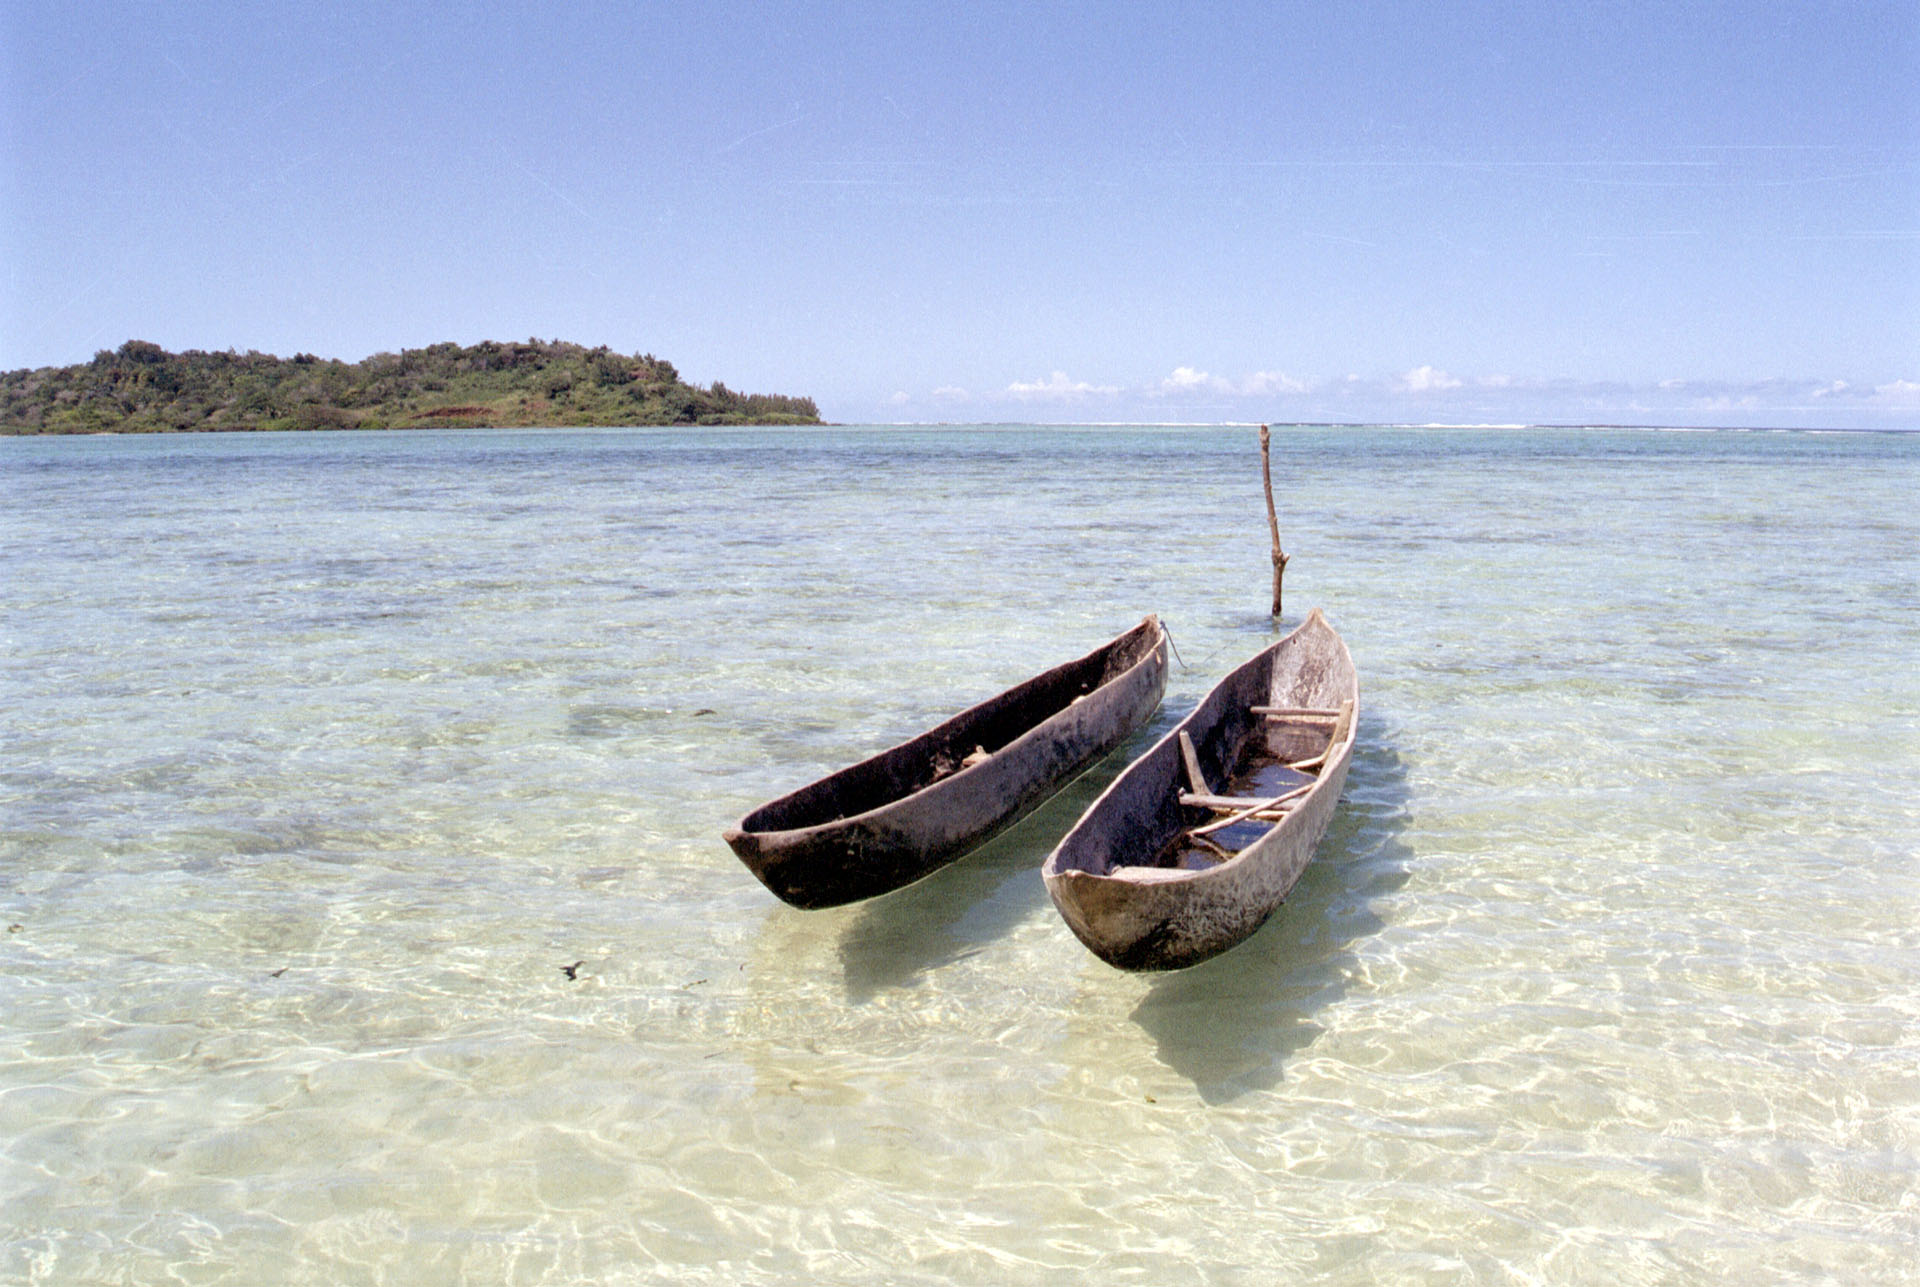 Île Sainte-Marie - Madagascar